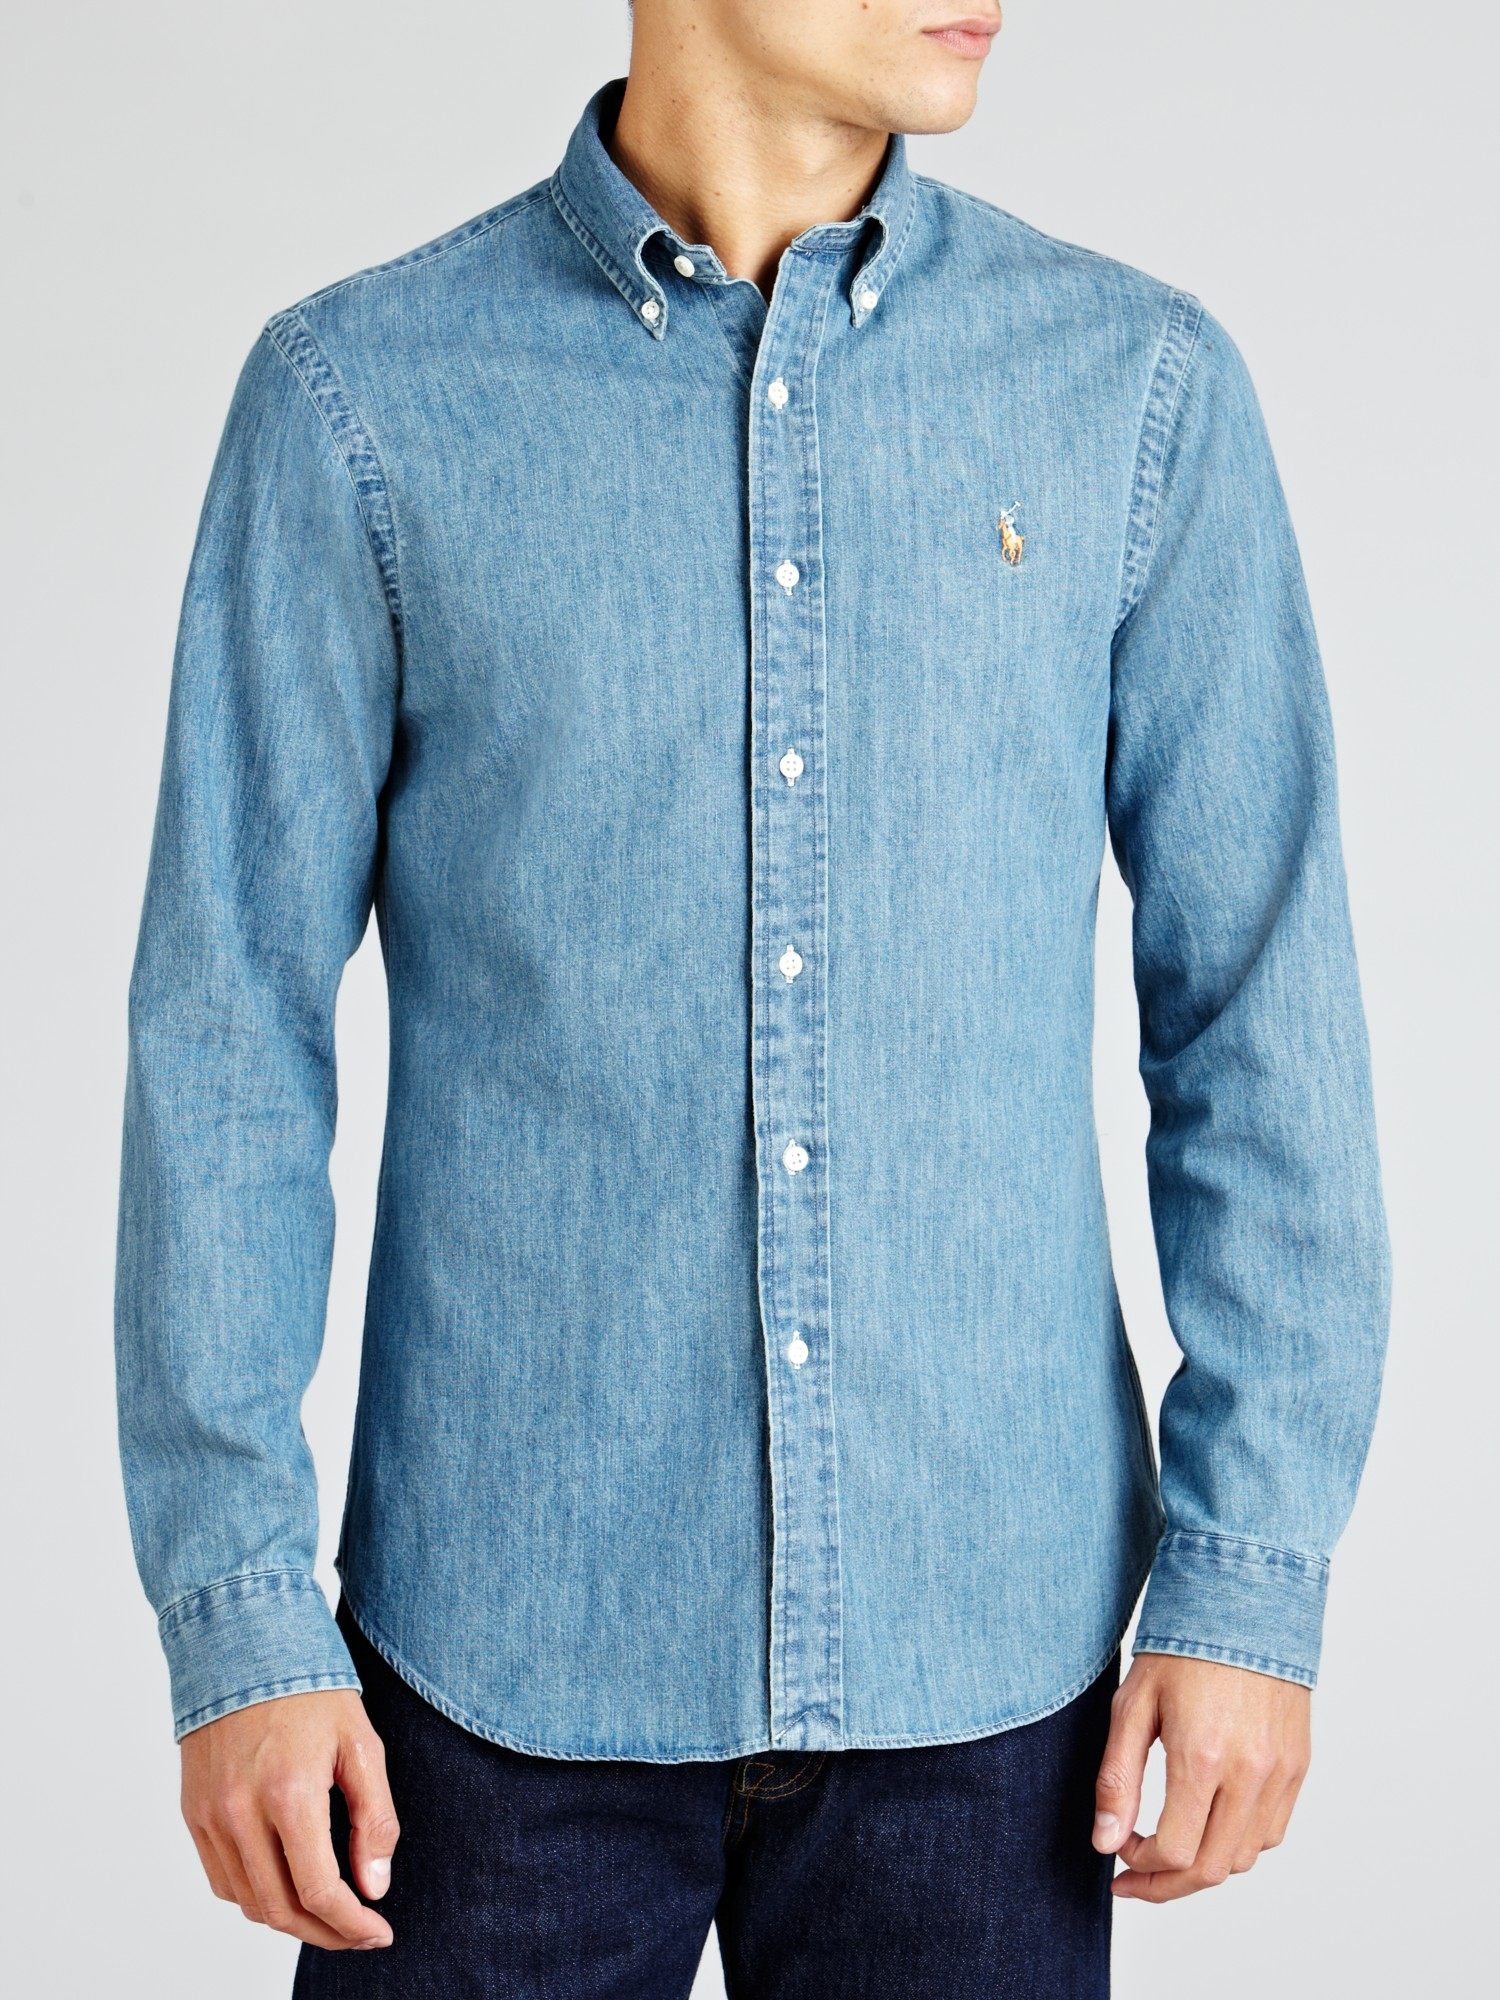 Polo Ralph Lauren Slim Fit Denim Shirt in Blue for Men - Lyst